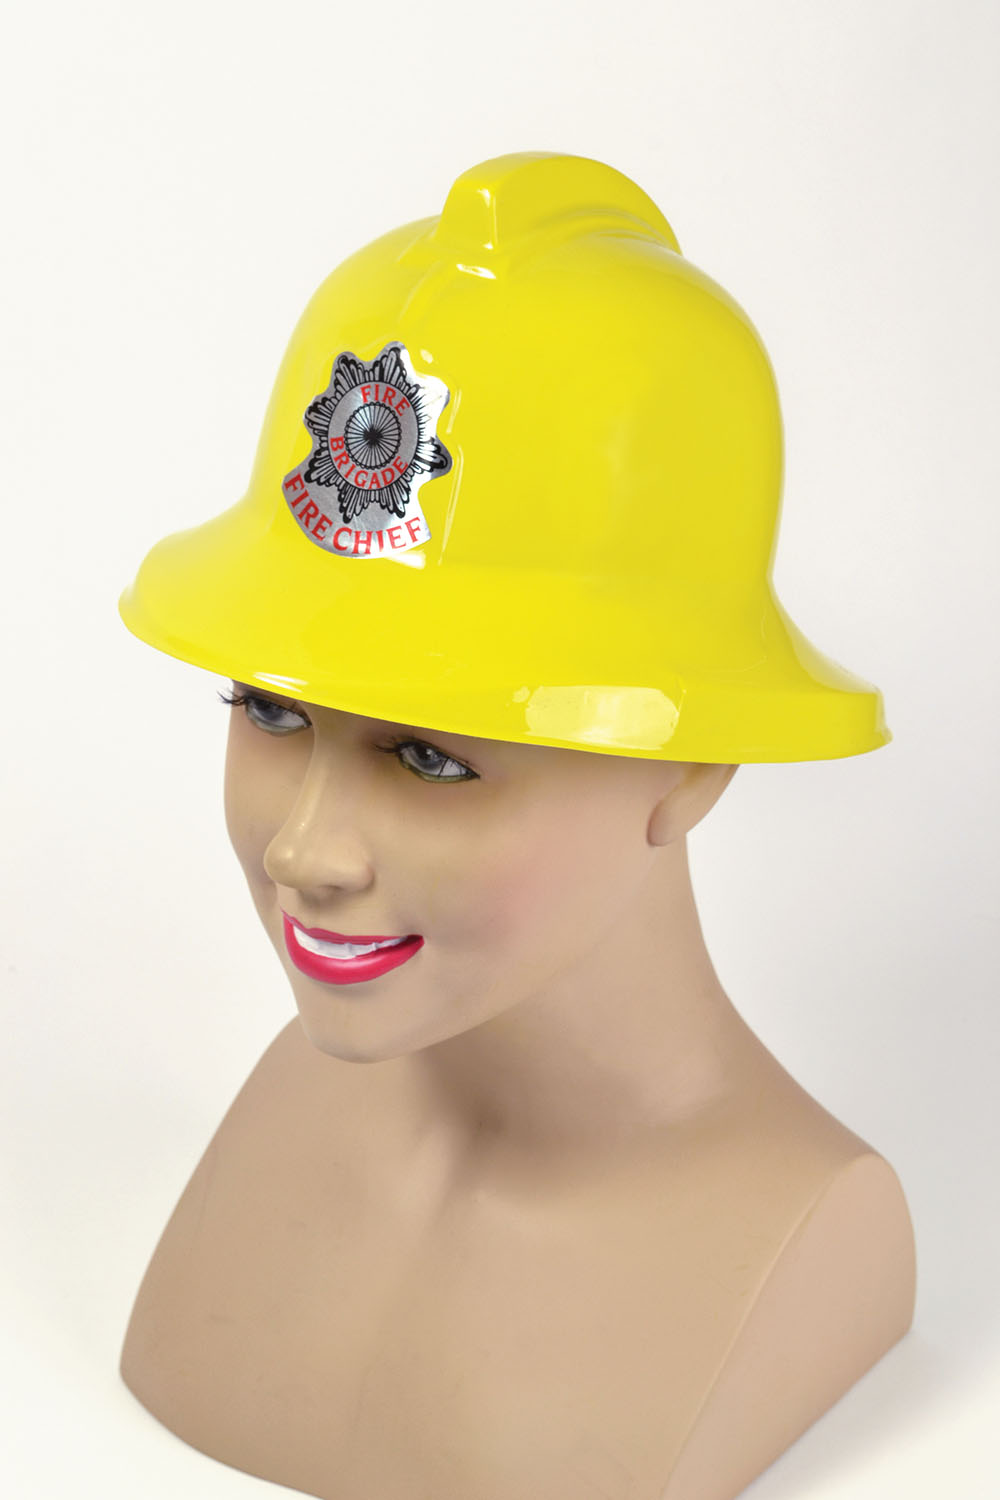 Fireman Helmet, Yellow plastic